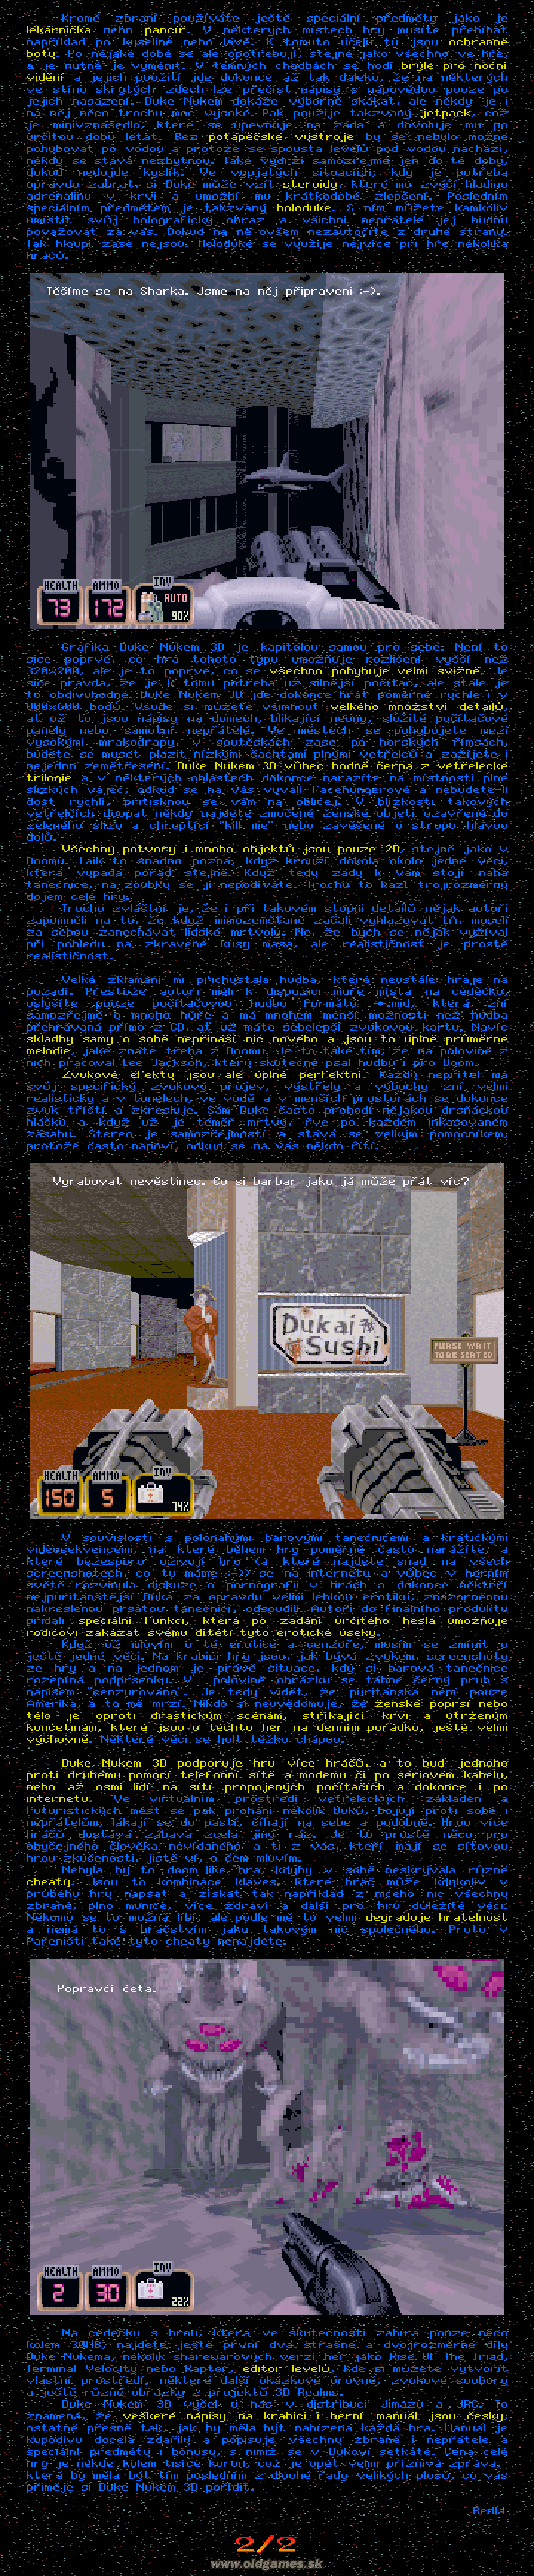 Duke Nukem 3D (2/2)